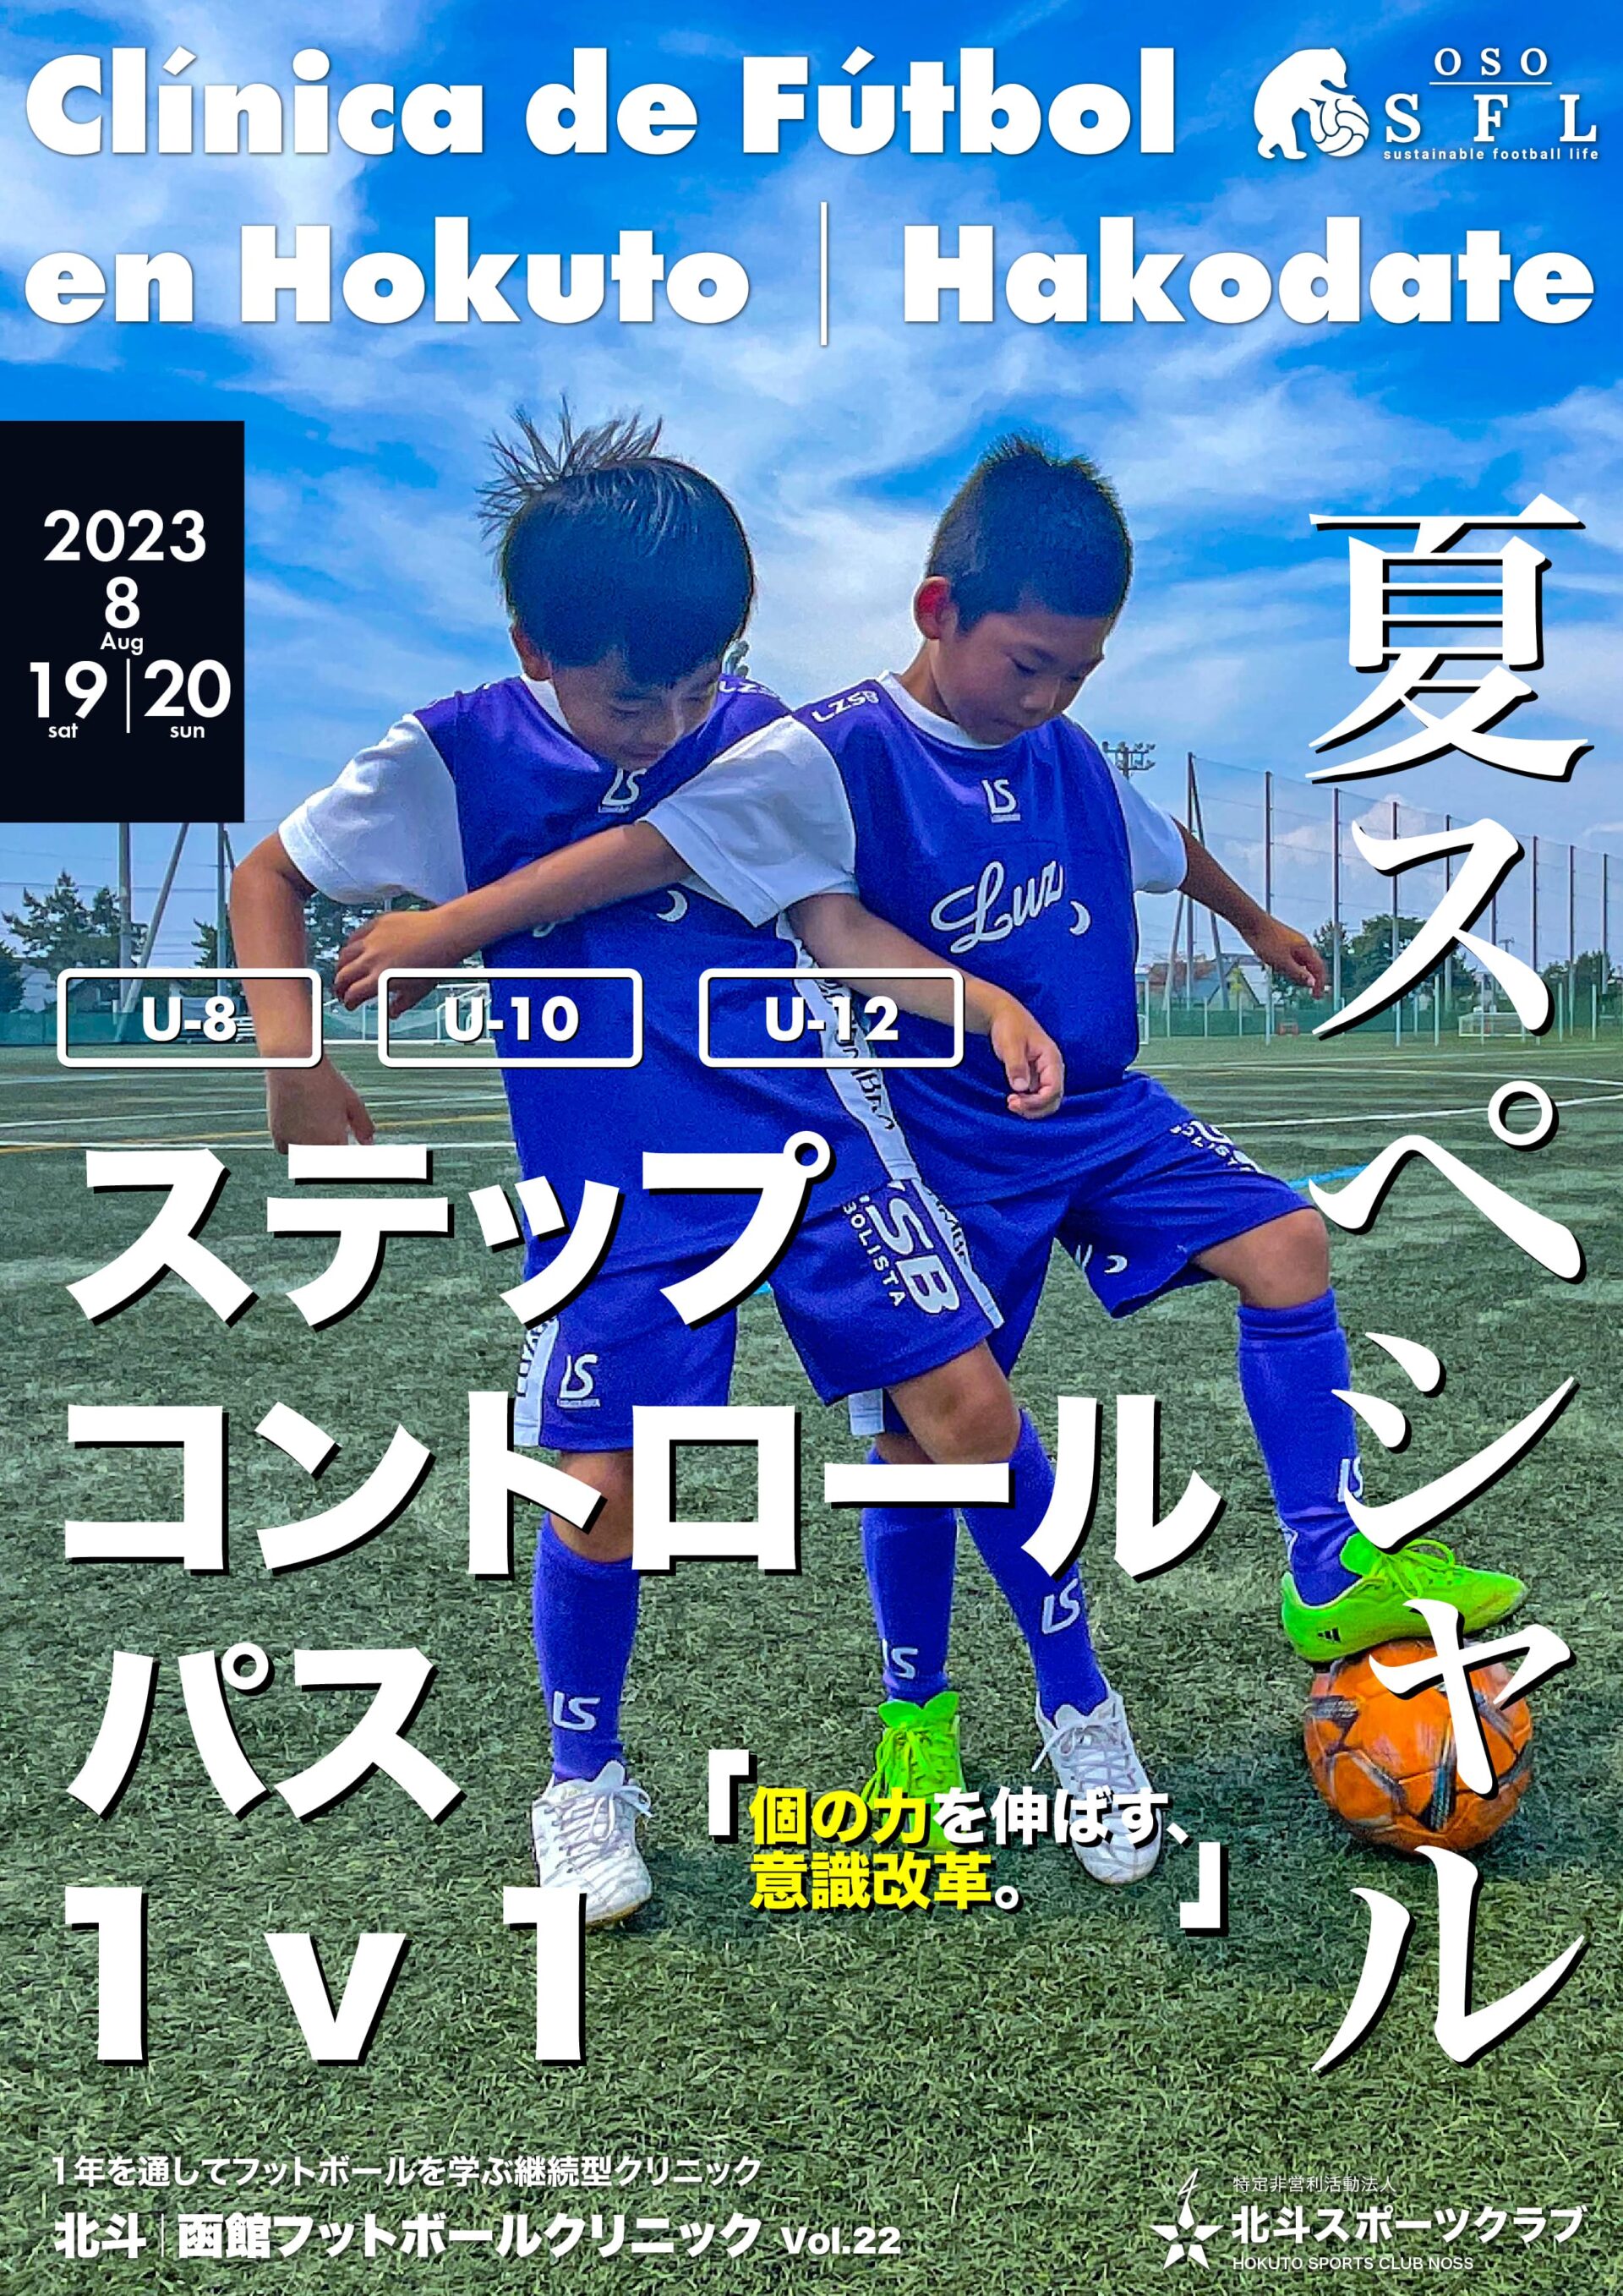 20230612_notice-hokuto-hakodate-football-clinic-2023-vol21_A4-02-min